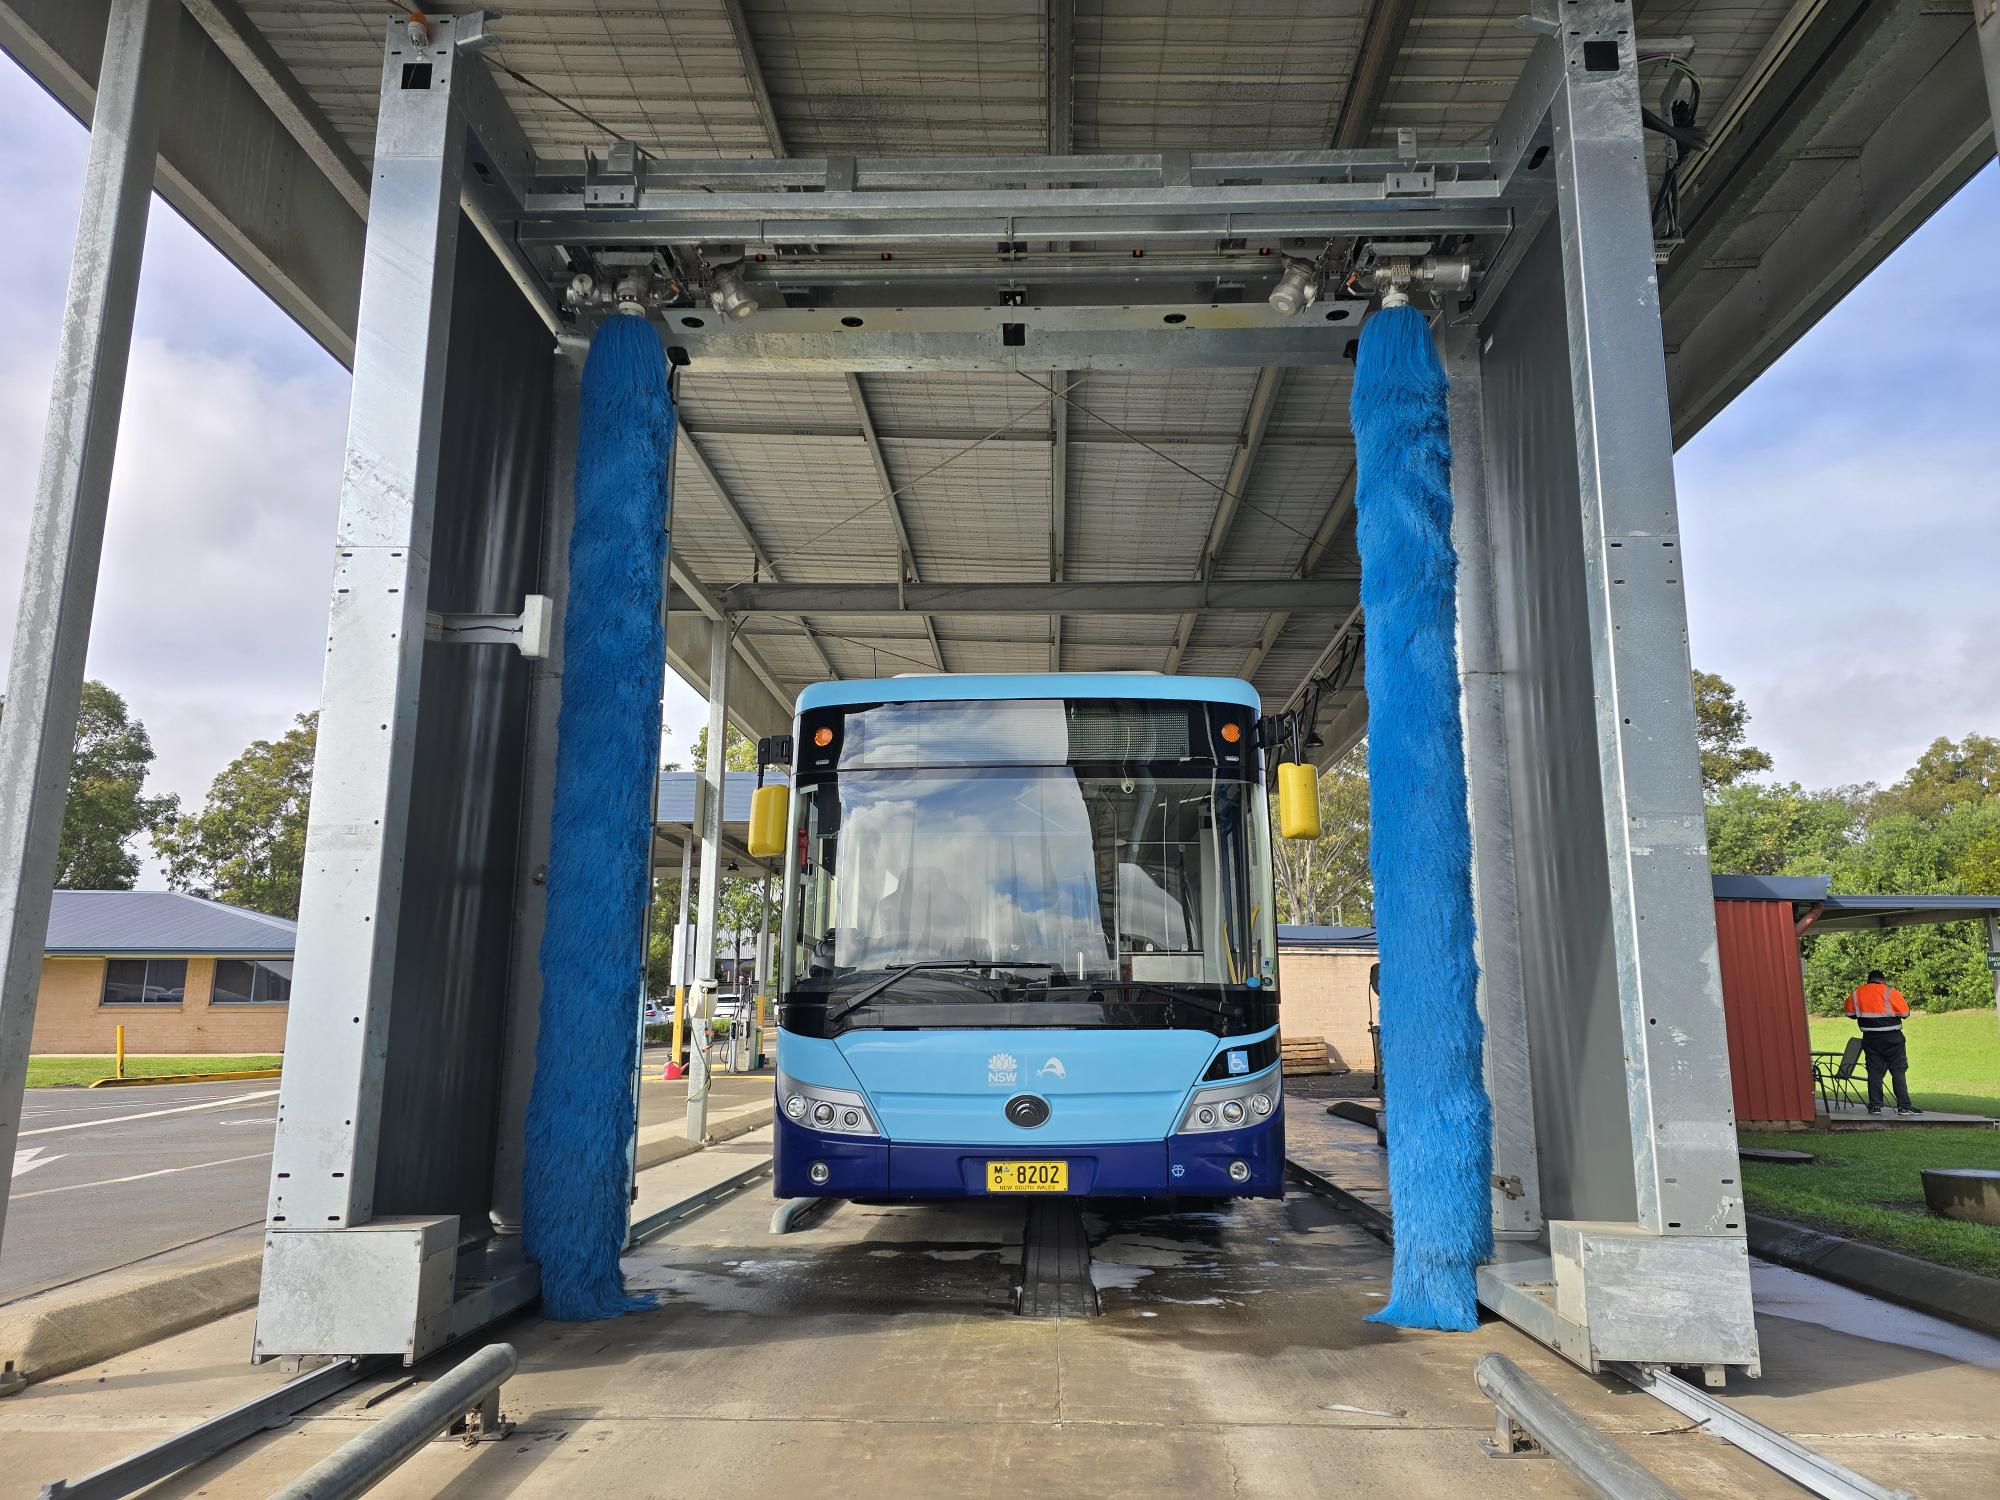 Transit Systems Installs Water-Saving Bus Wash in Sydney